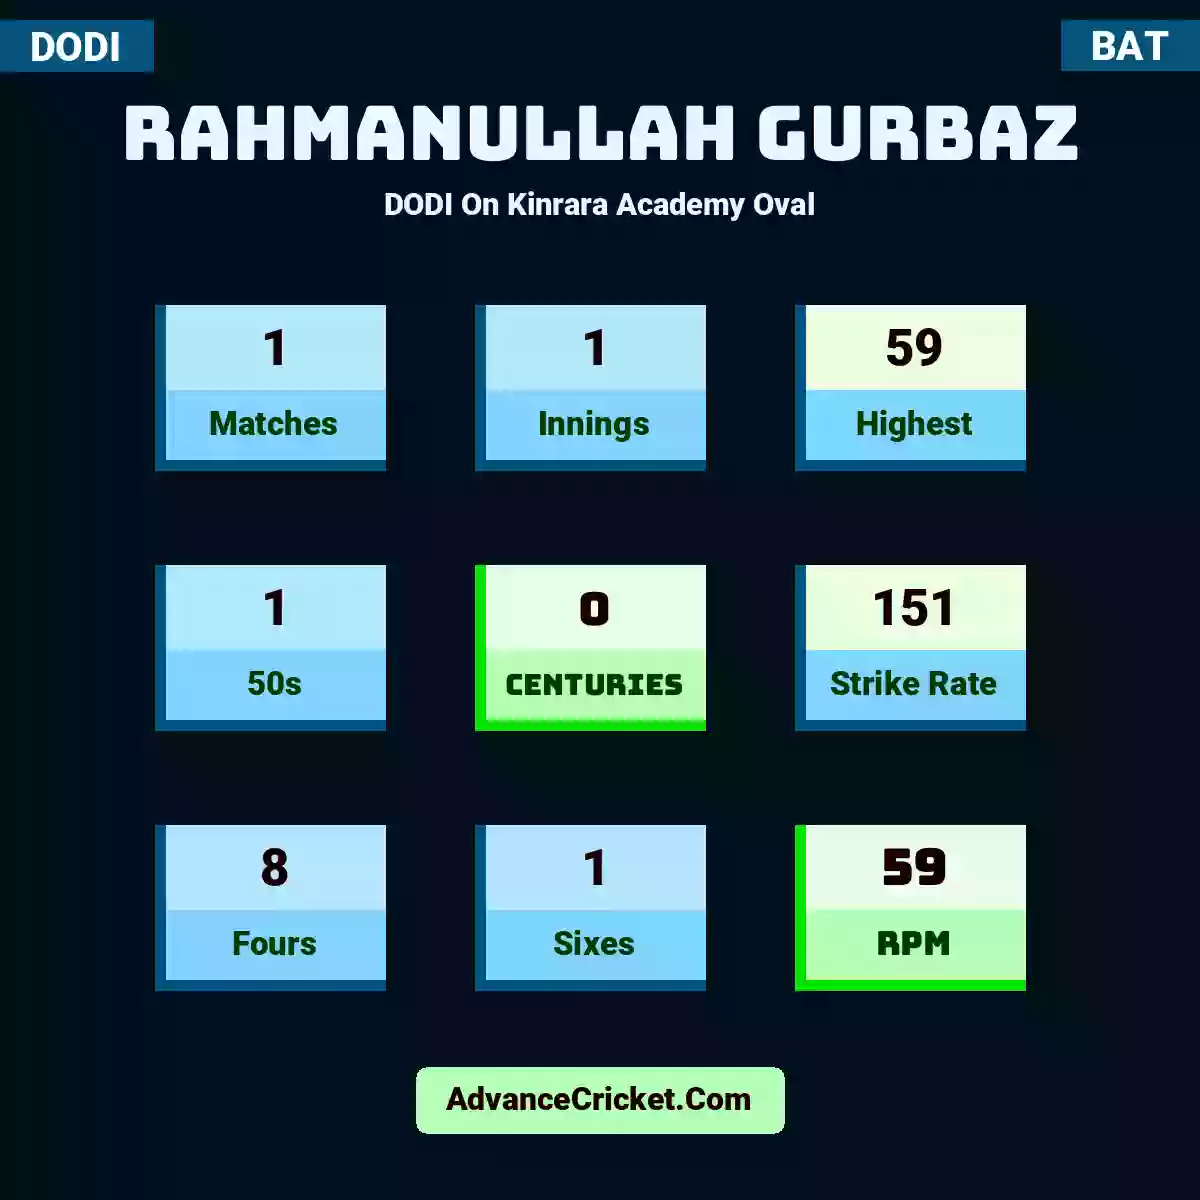 Rahmanullah Gurbaz DODI  On Kinrara Academy Oval, Rahmanullah Gurbaz played 1 matches, scored 59 runs as highest, 1 half-centuries, and 0 centuries, with a strike rate of 151. R.Gurbaz hit 8 fours and 1 sixes, with an RPM of 59.